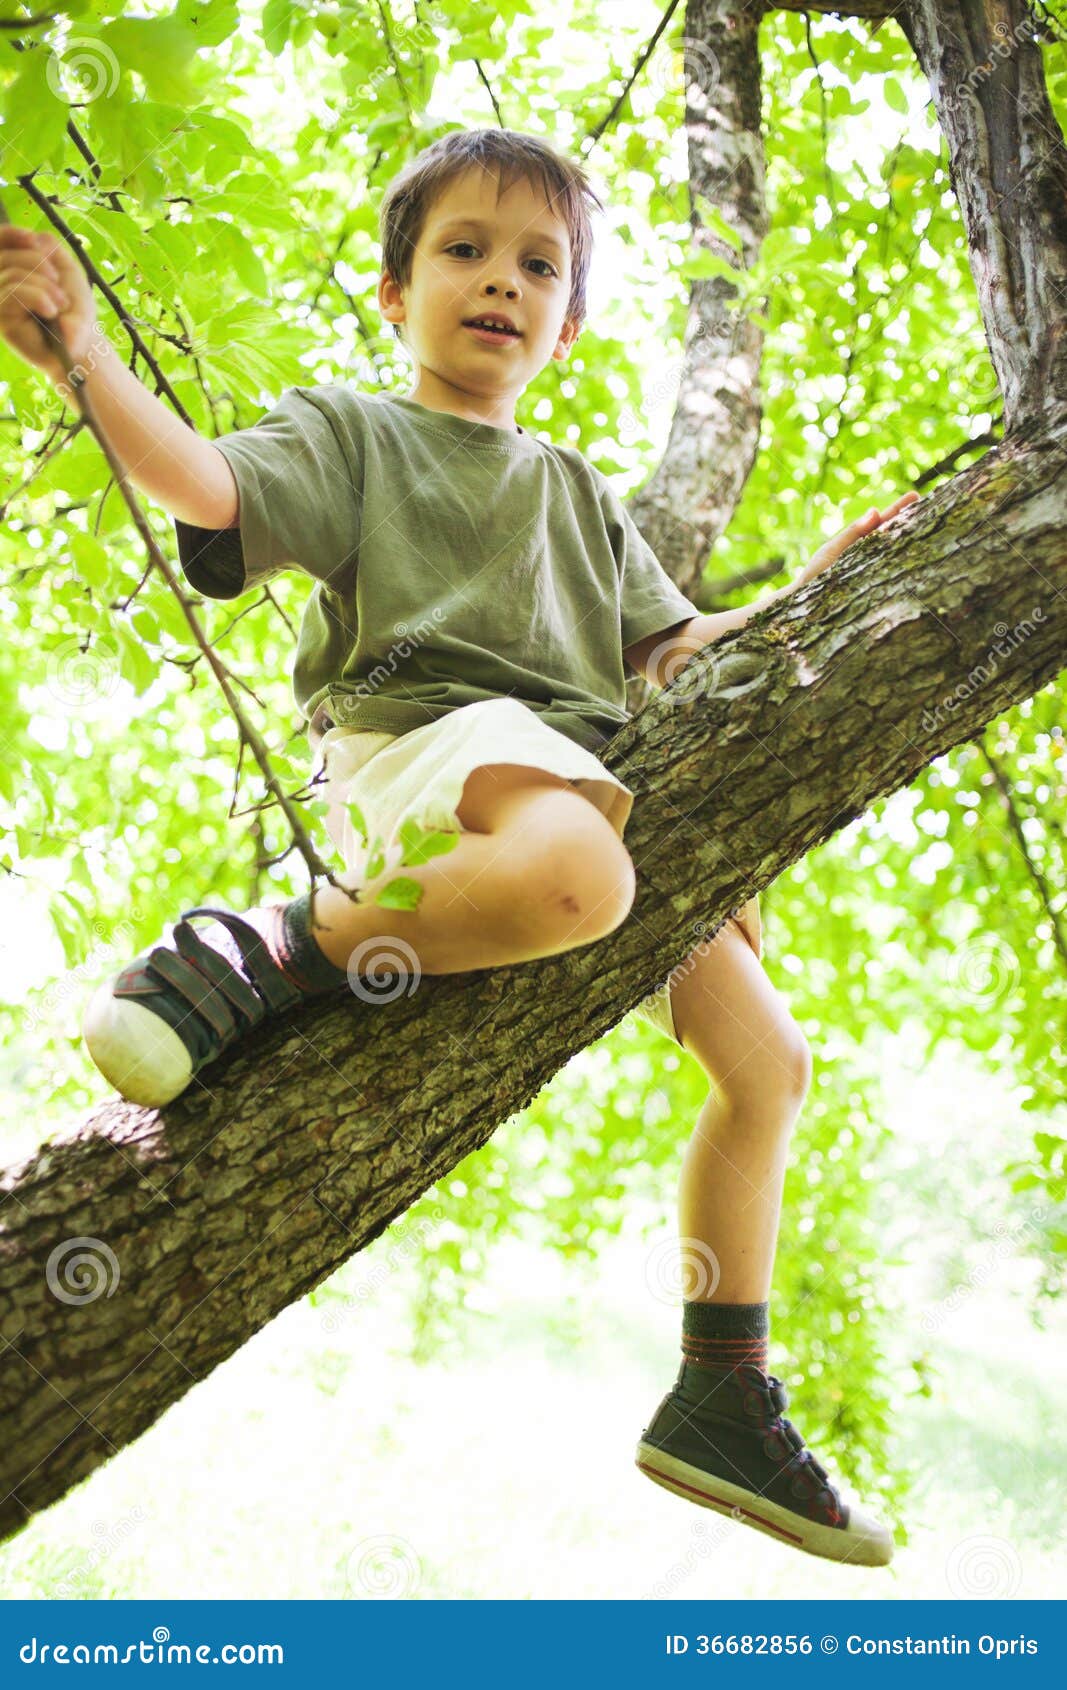 proud boy climbed in tree